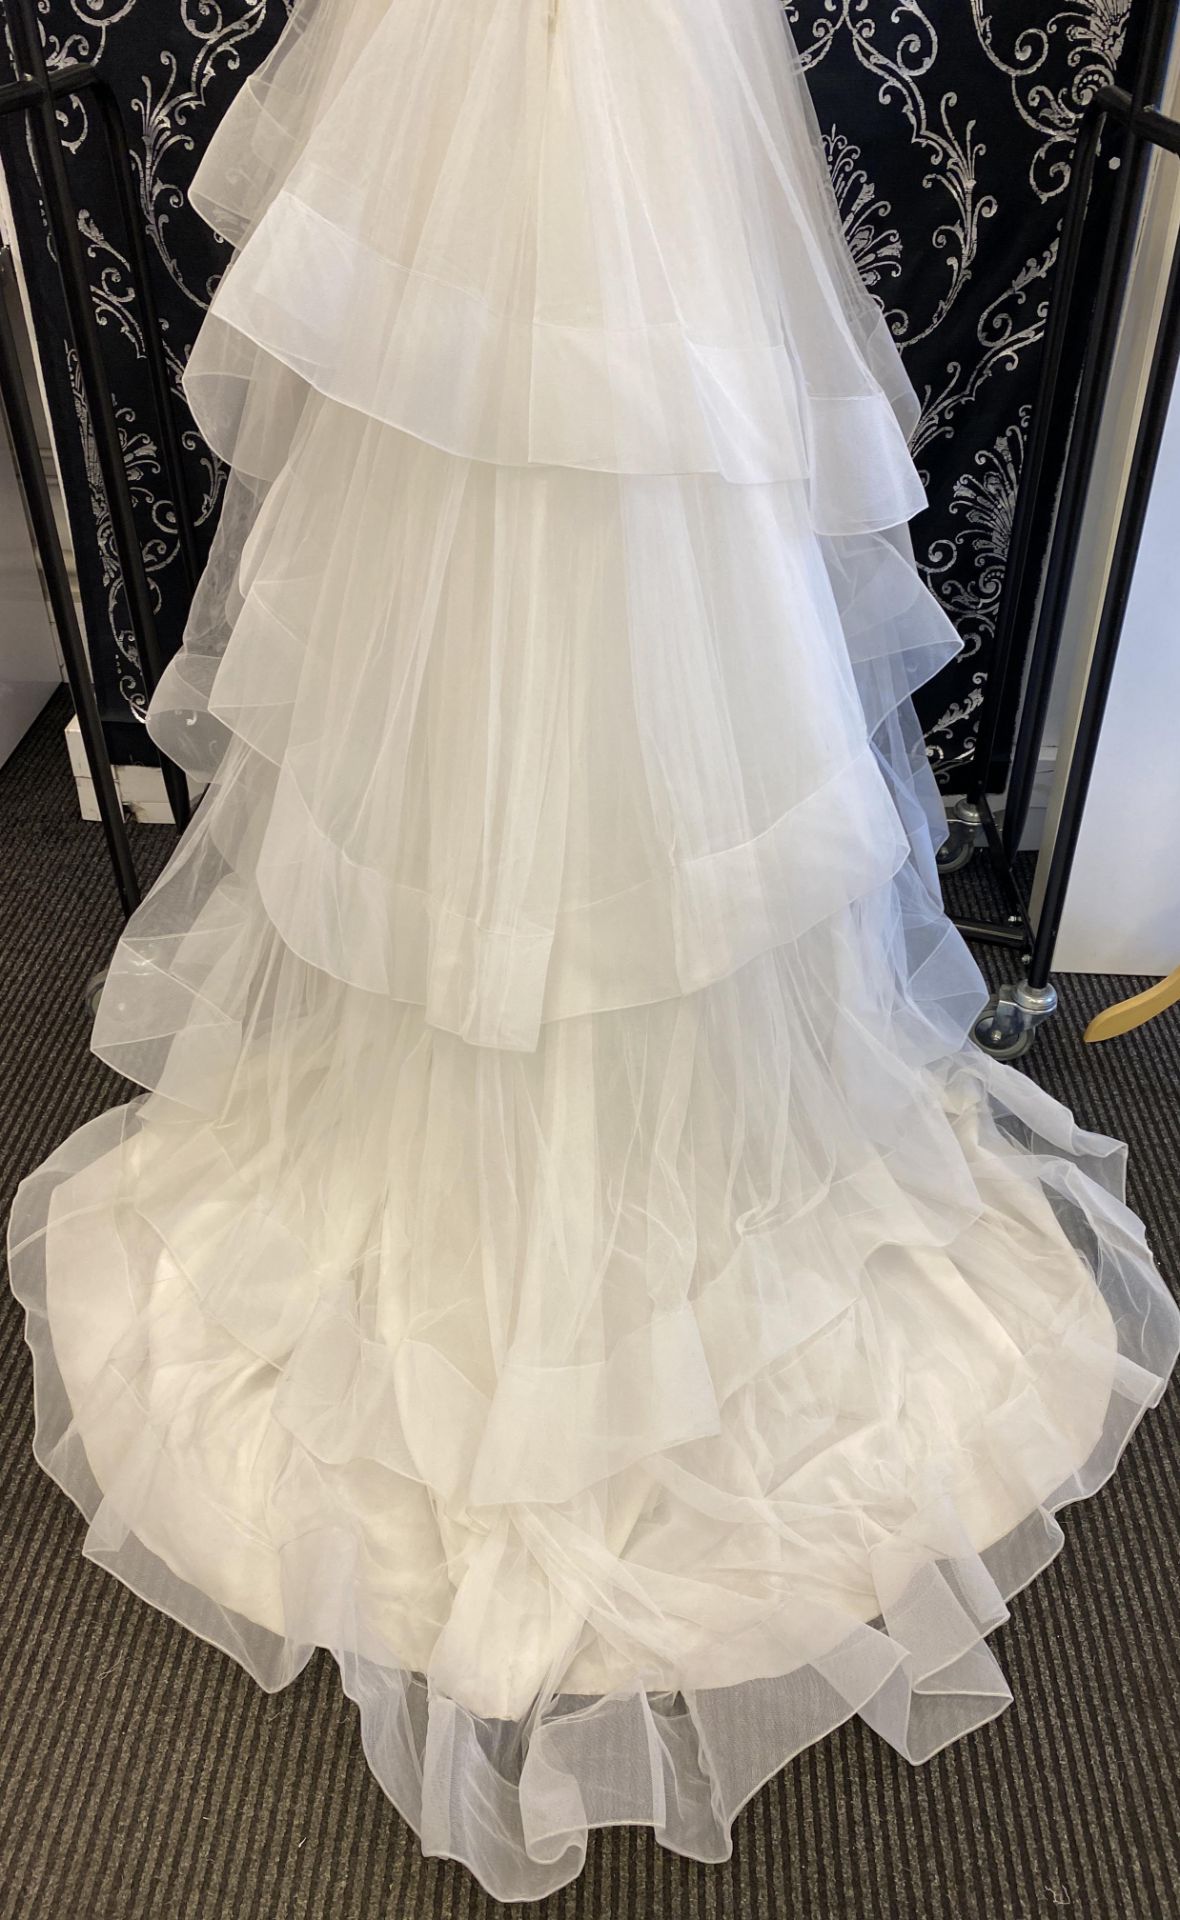 1 x ALLURE '9705' Stunning Chiffon Sculpted Skirted Designer Wedding Dress RRP £2,100 UK12 - Image 9 of 9